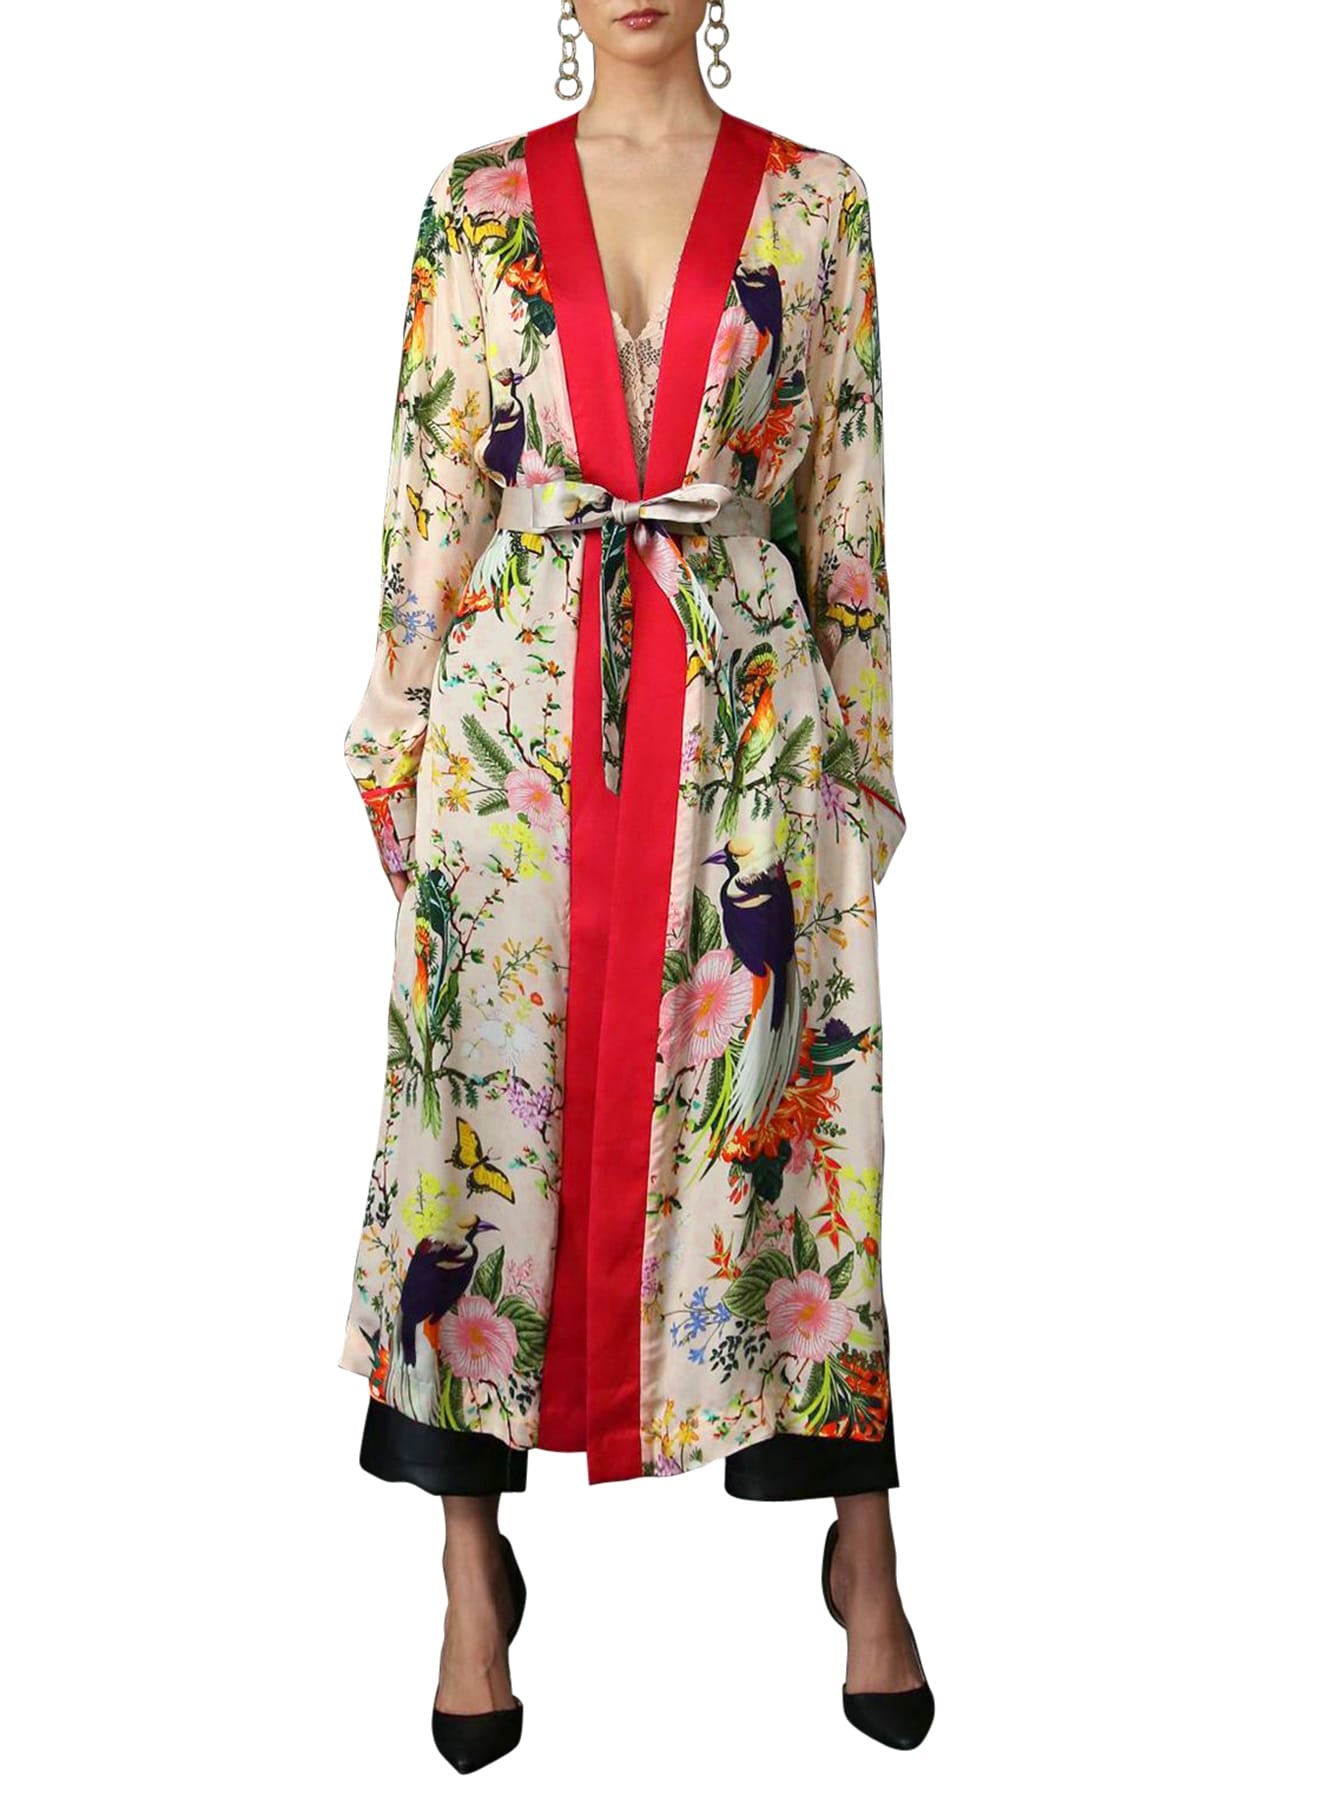 "Kyle X Shahida" "beautiful kimono" "pink silk robe" "designer kimono" "robe dress silk"